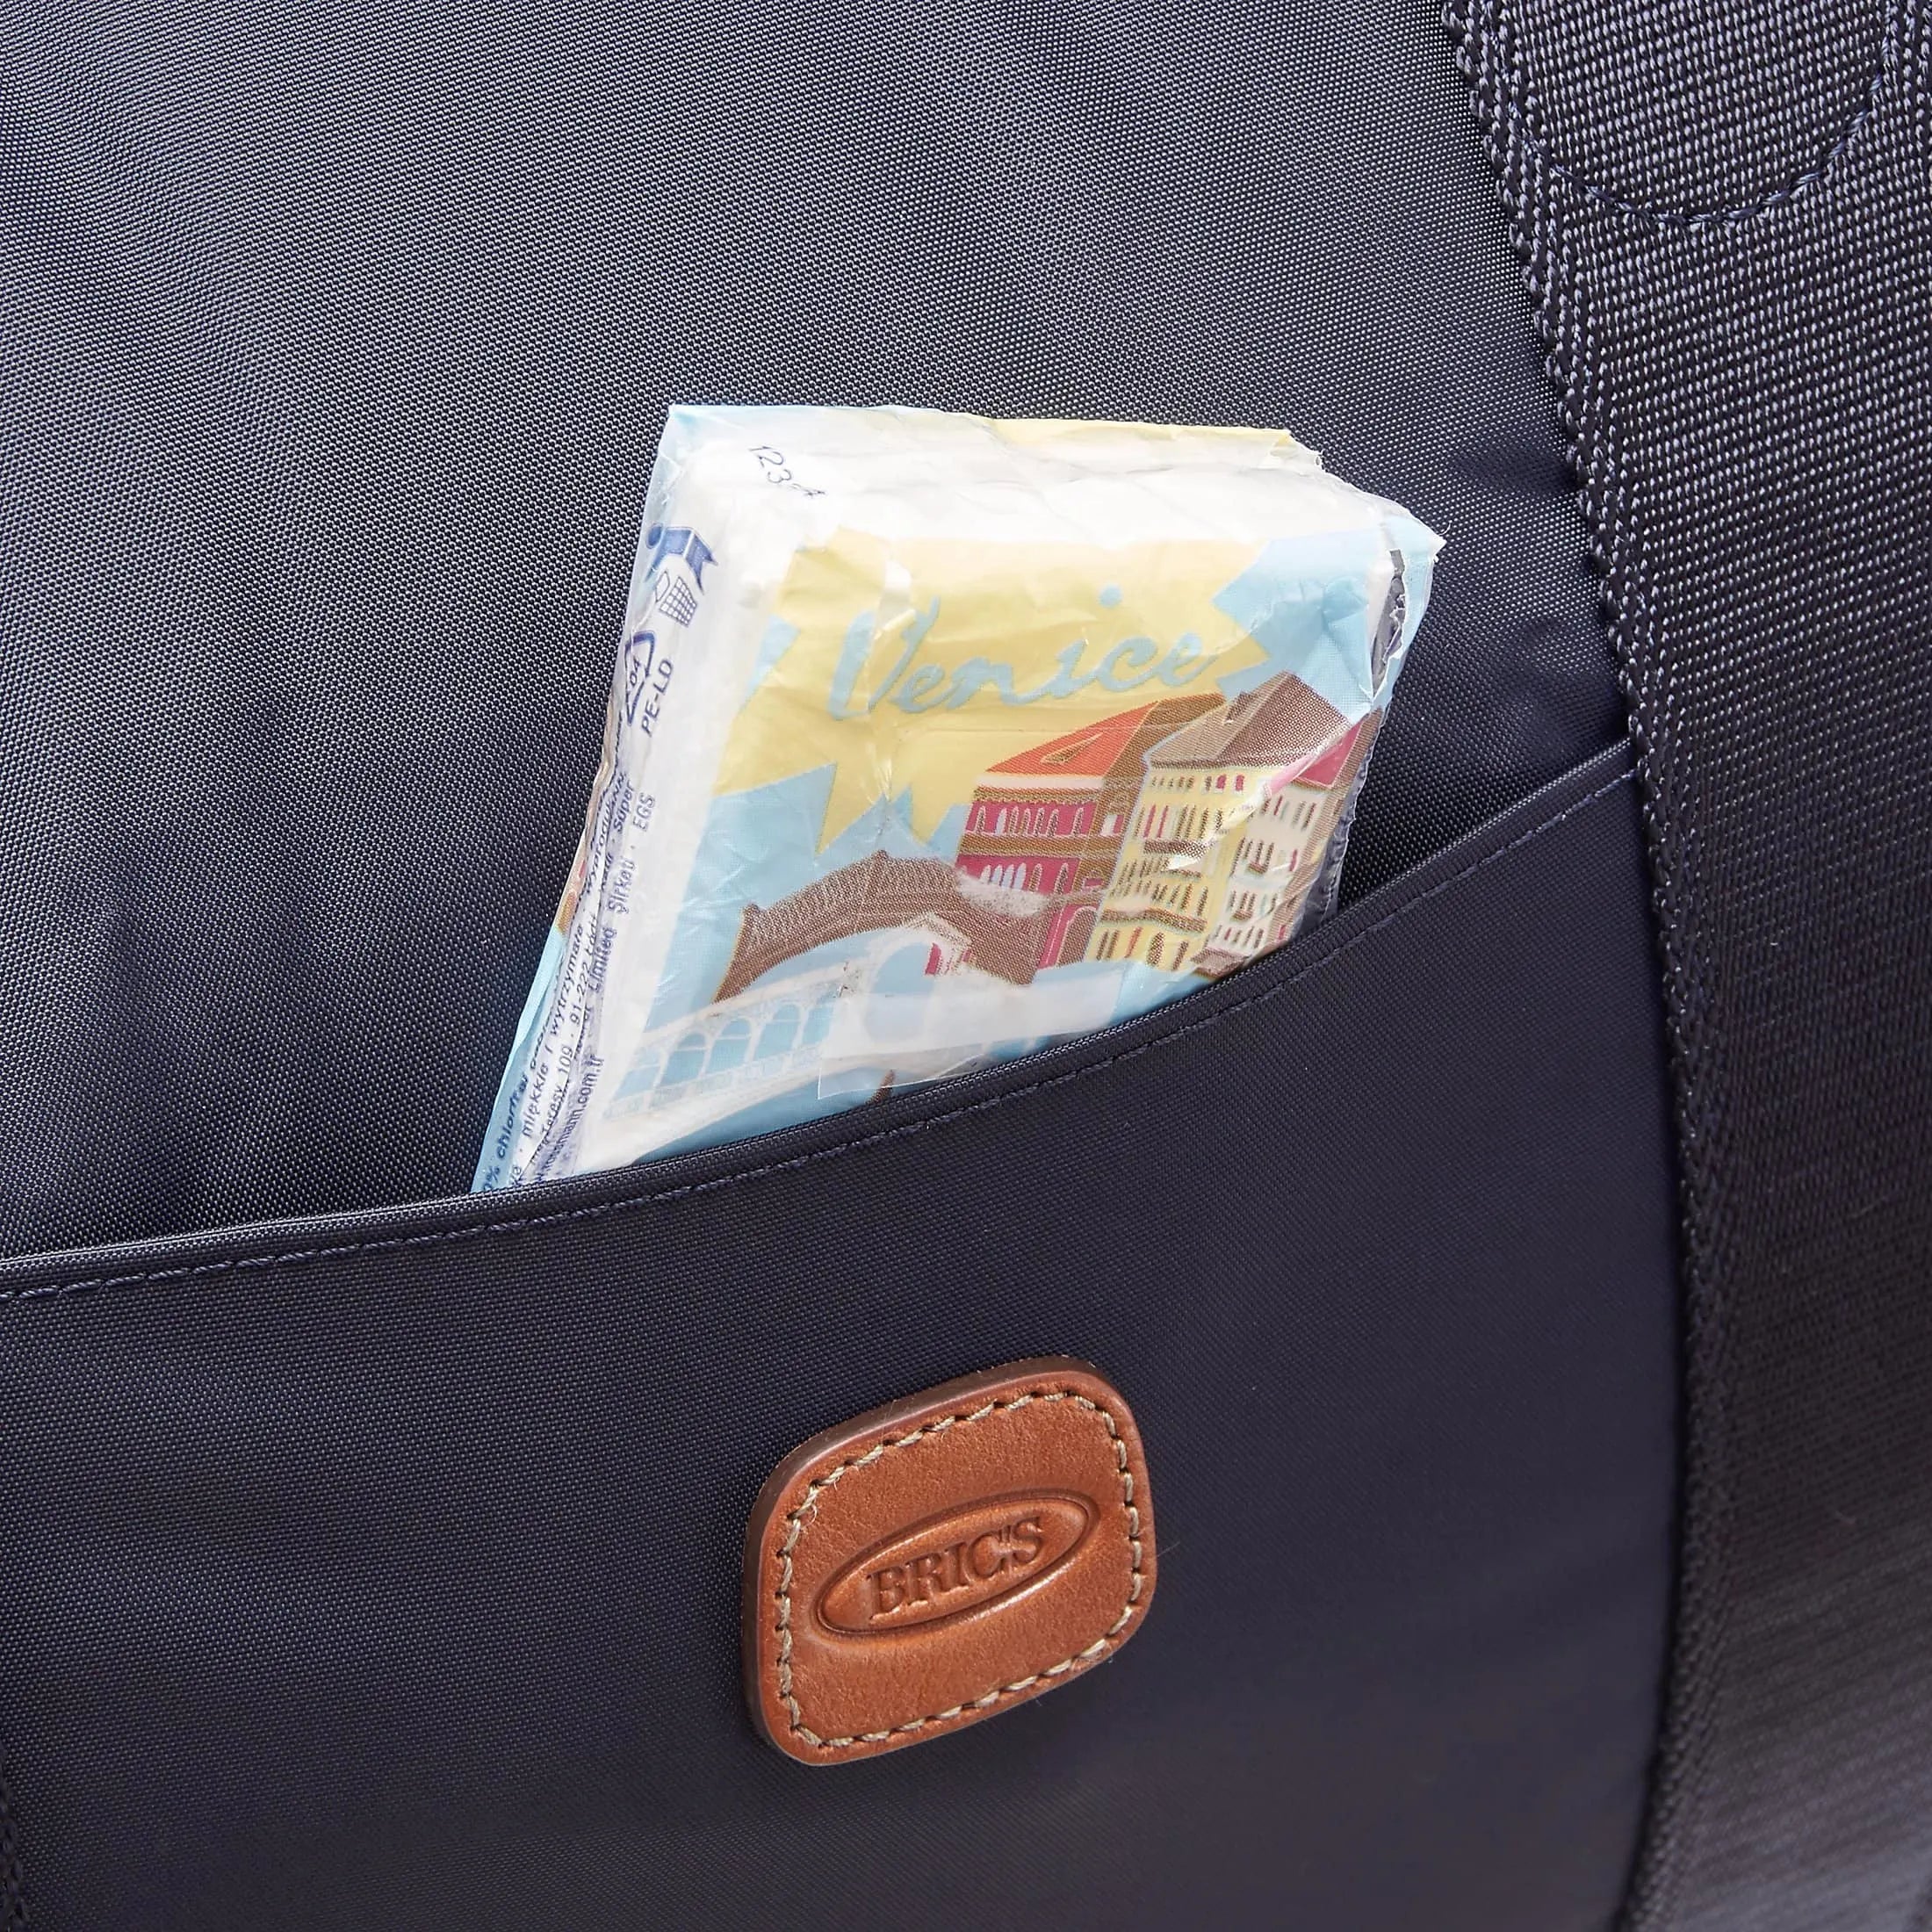 Brics X-Bag travel bag 55 cm - ocean blue